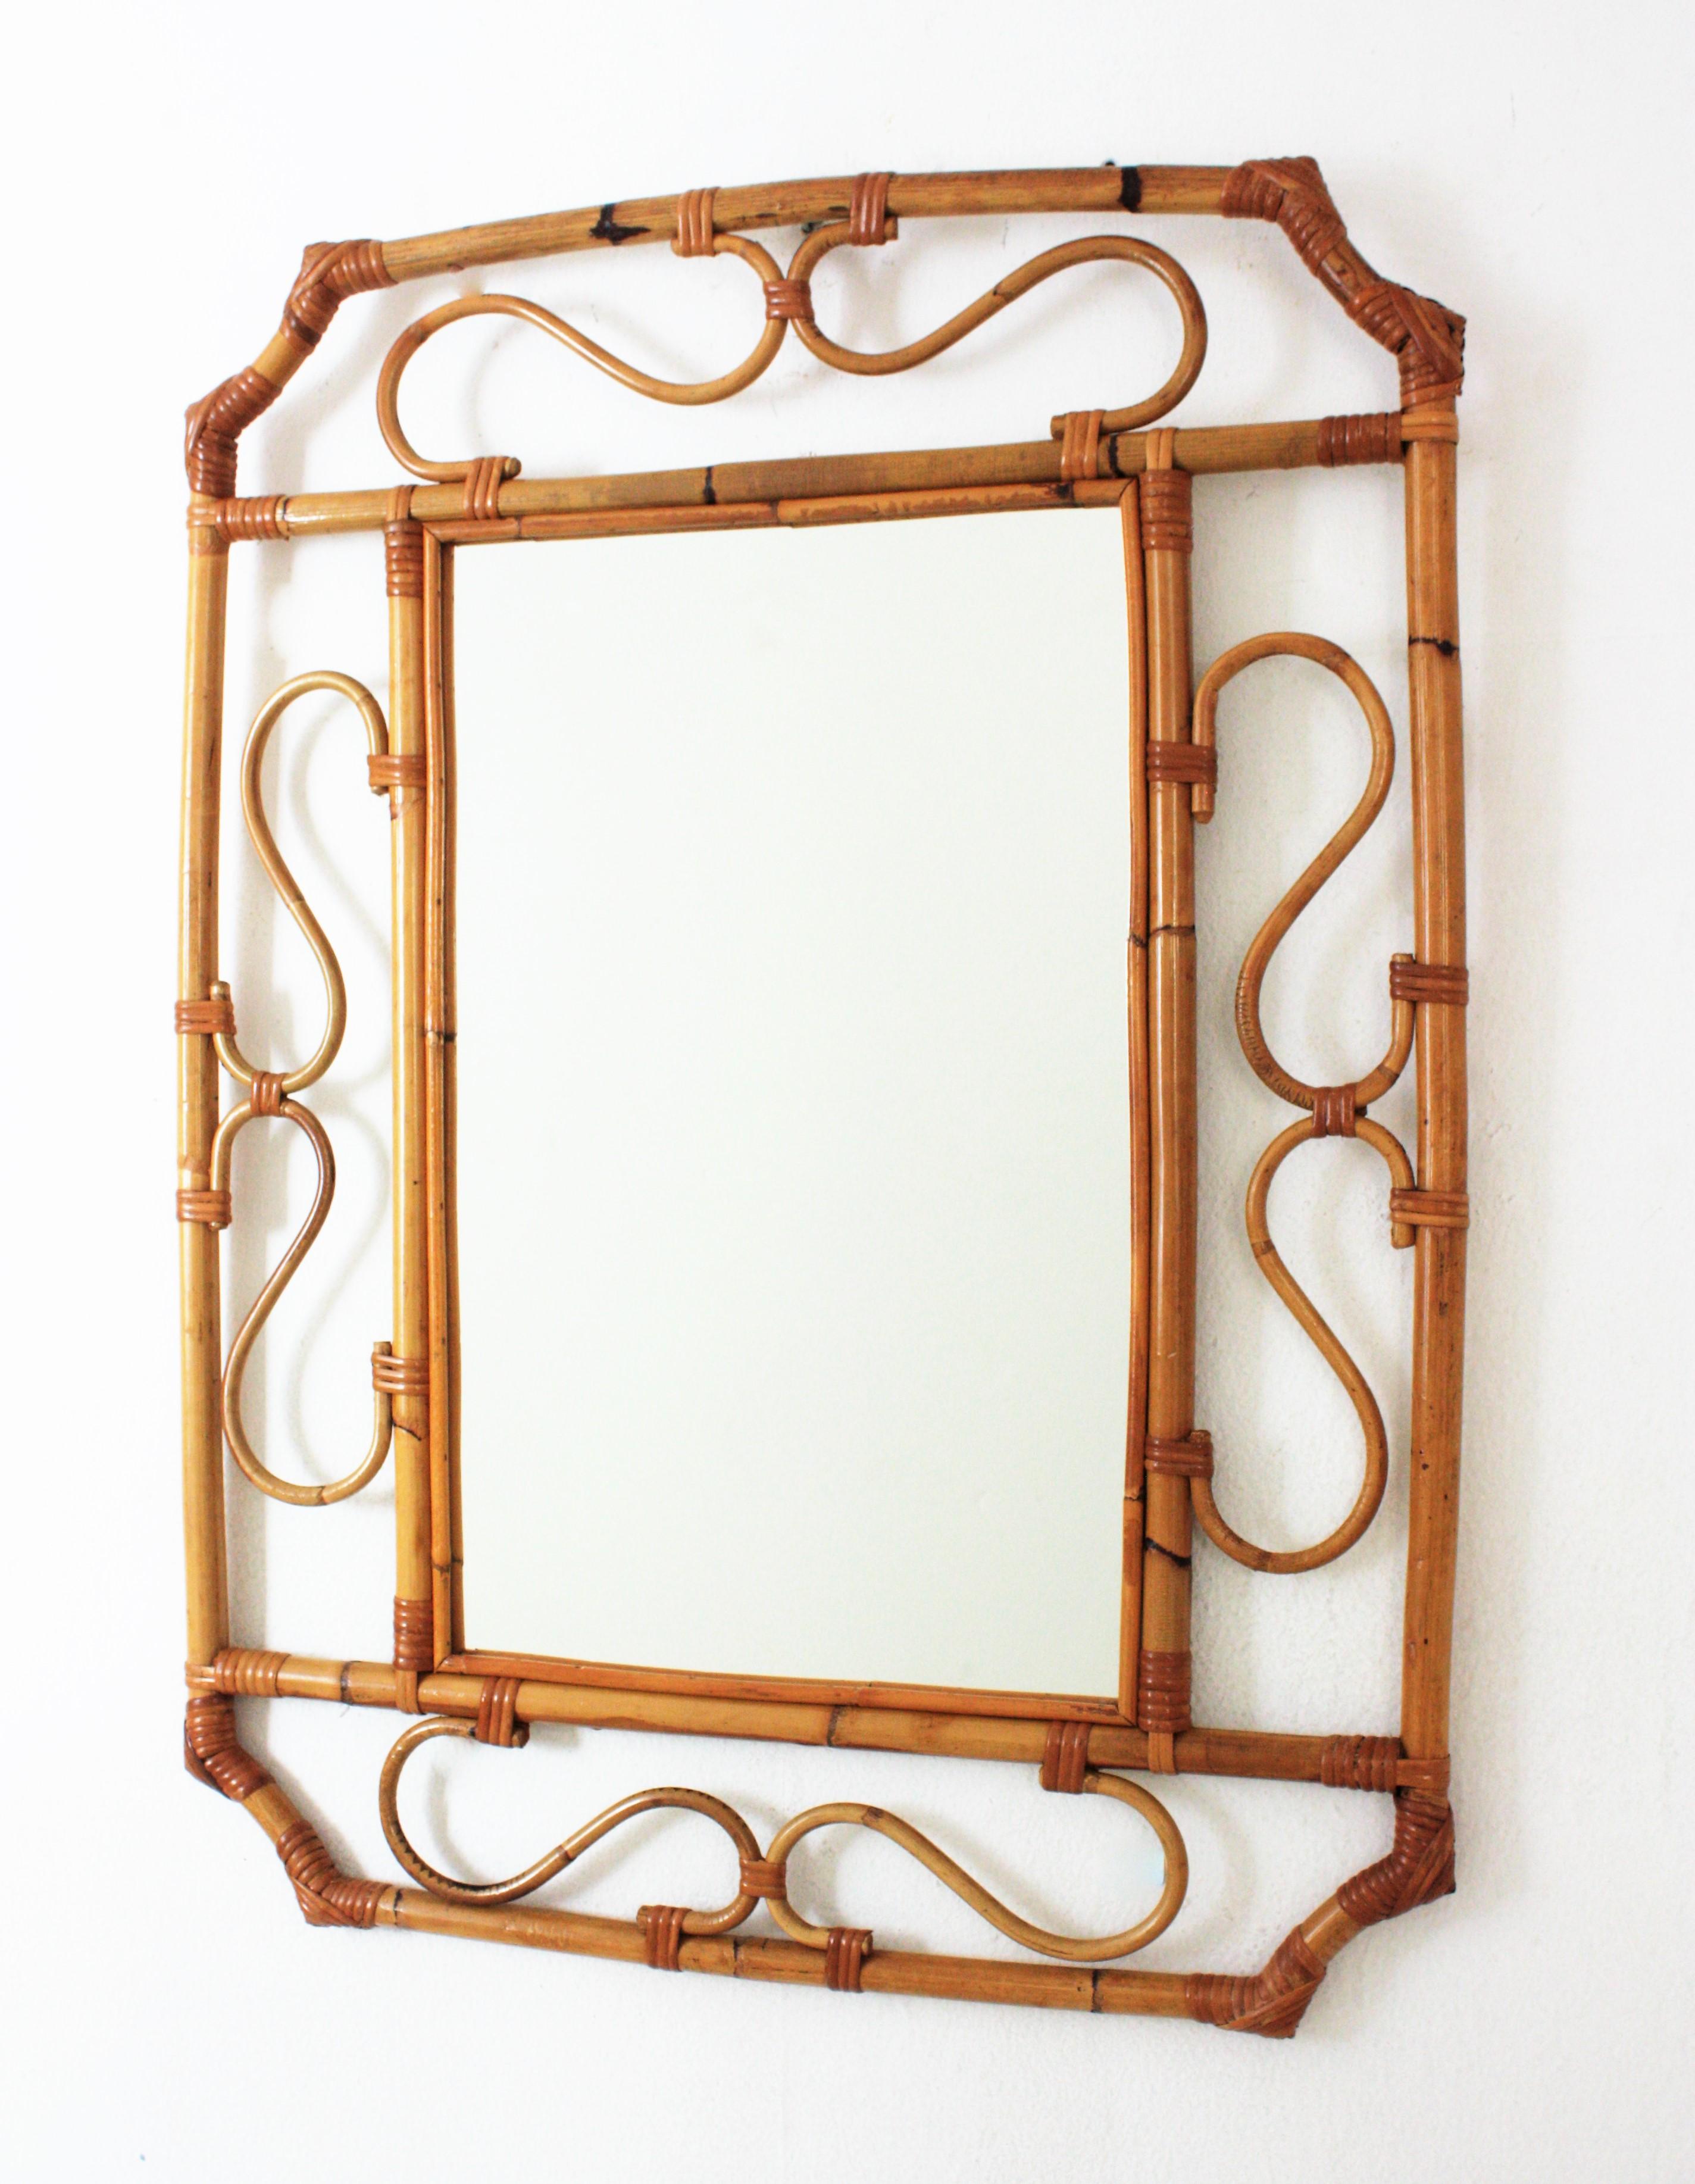 Cane Franco Albini Style Rattan Octagonal Mirror, Italy, 1960s